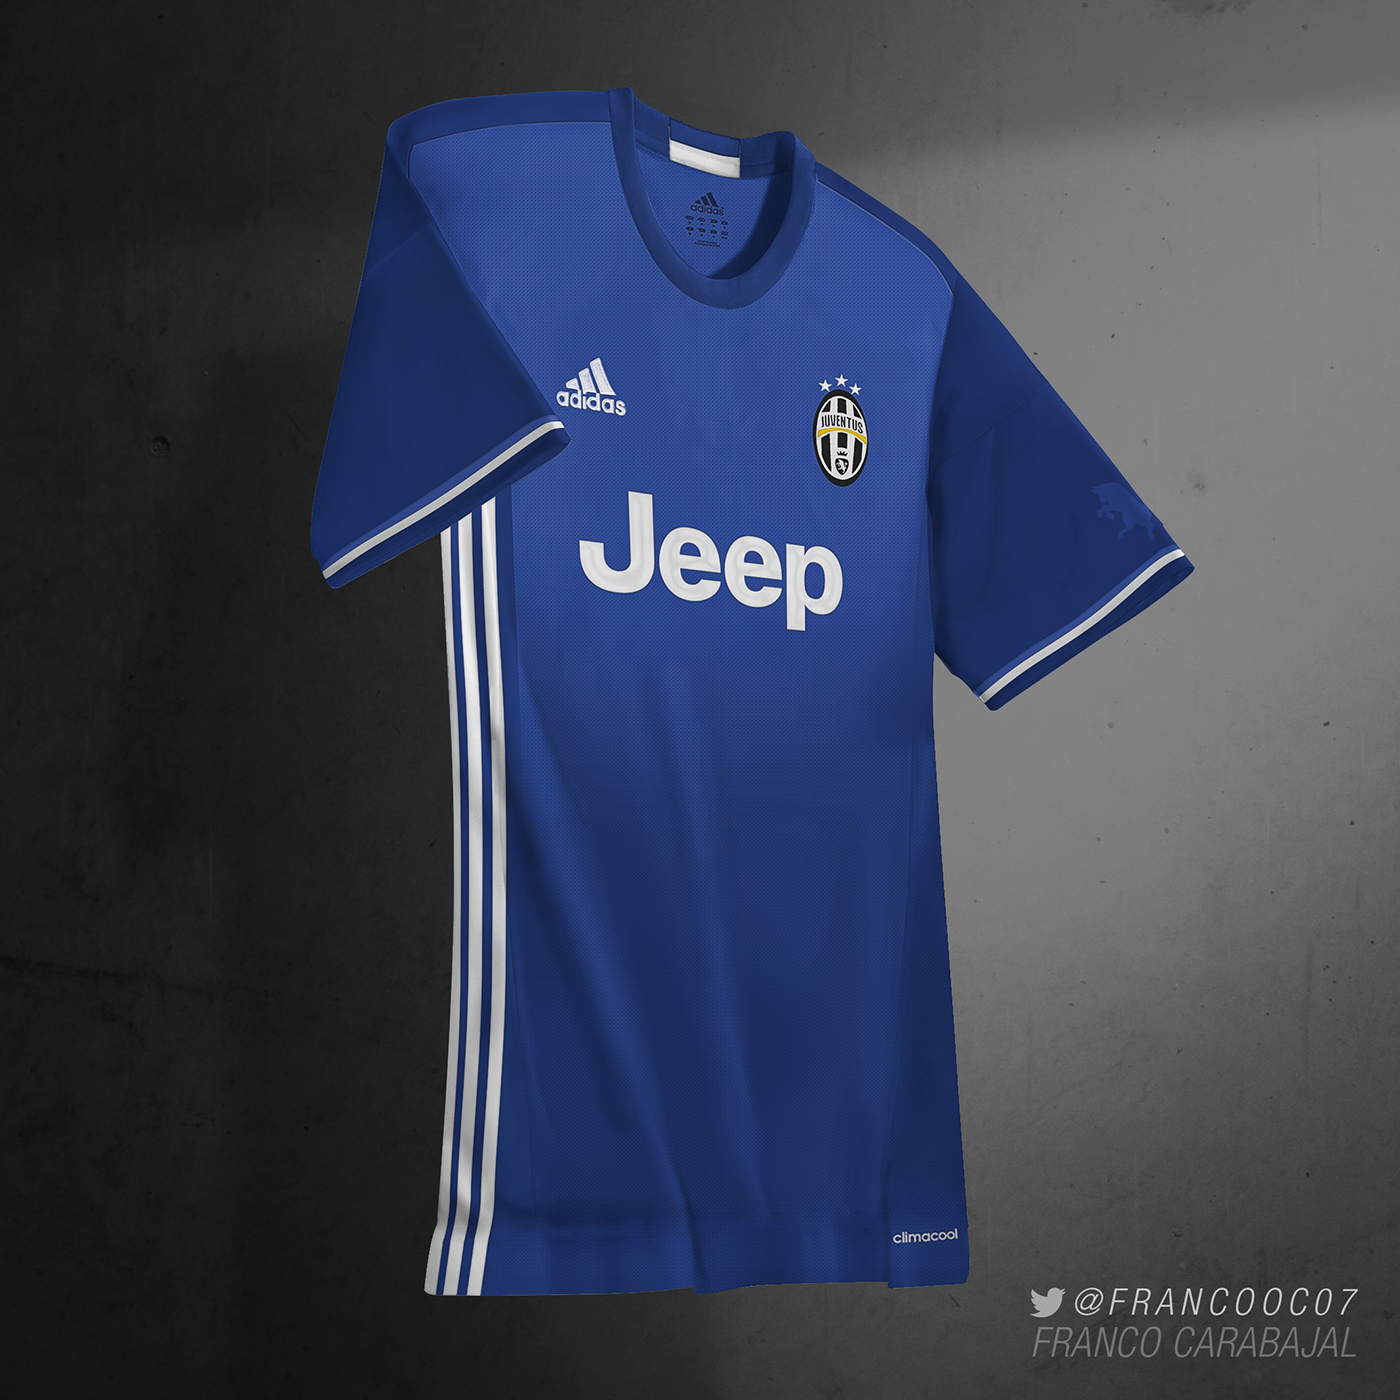 adidas Adidas Kit jersey camisetas Futbol football football kits Real Madrid Chelsea Juventus bayern munich